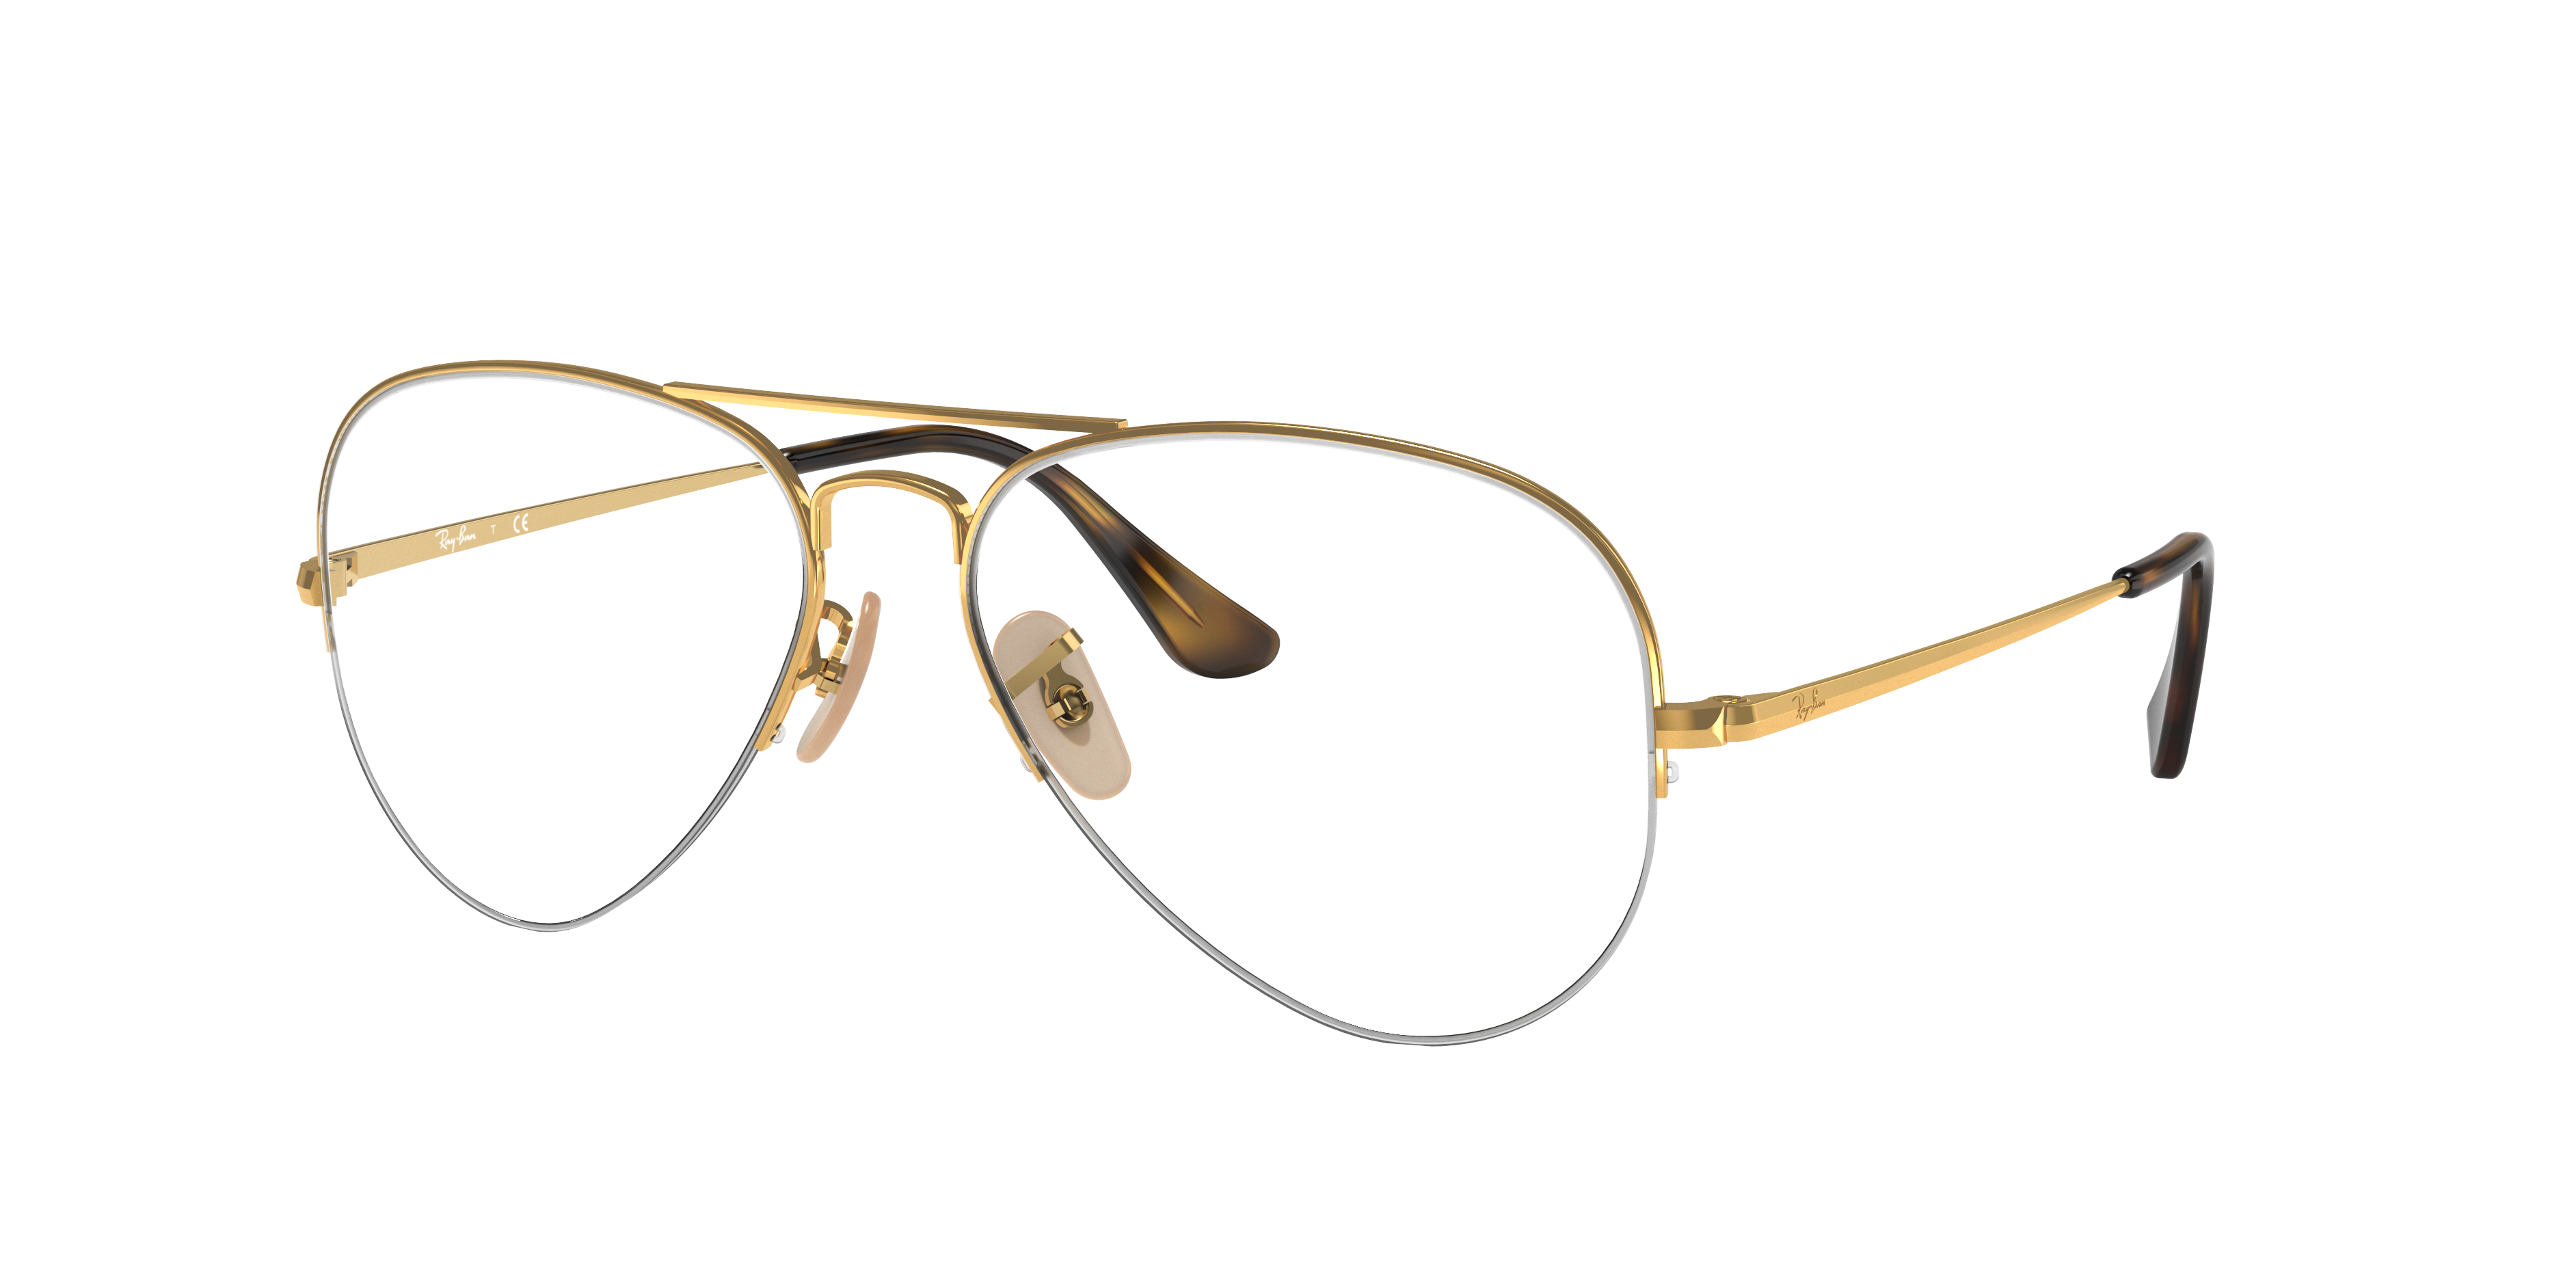 Aviator Gaze Eyeglasses with Gold Frame | Ray-Ban®